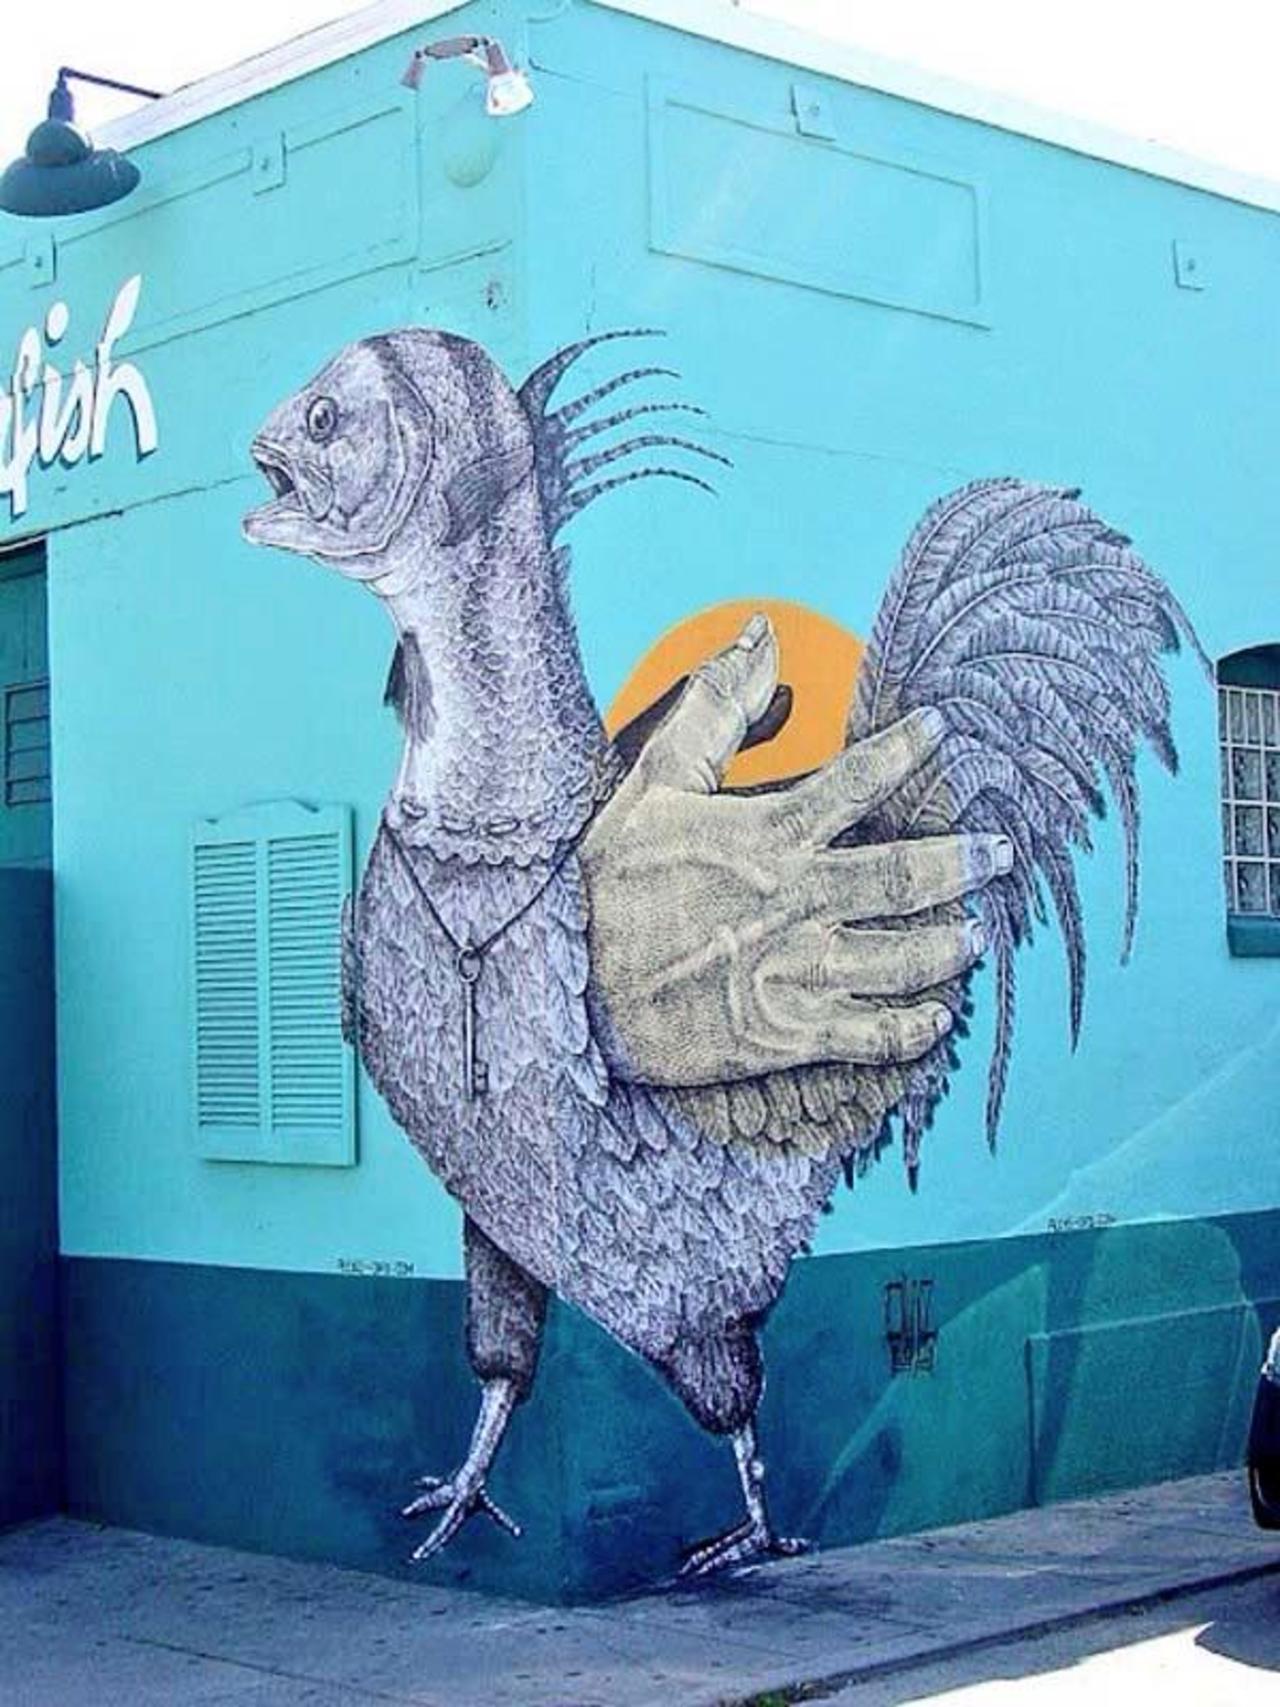 Alexis Diaz
Los Angeles, USA

#streetart #art #Graffiti #mural http://t.co/7nebotfUgp